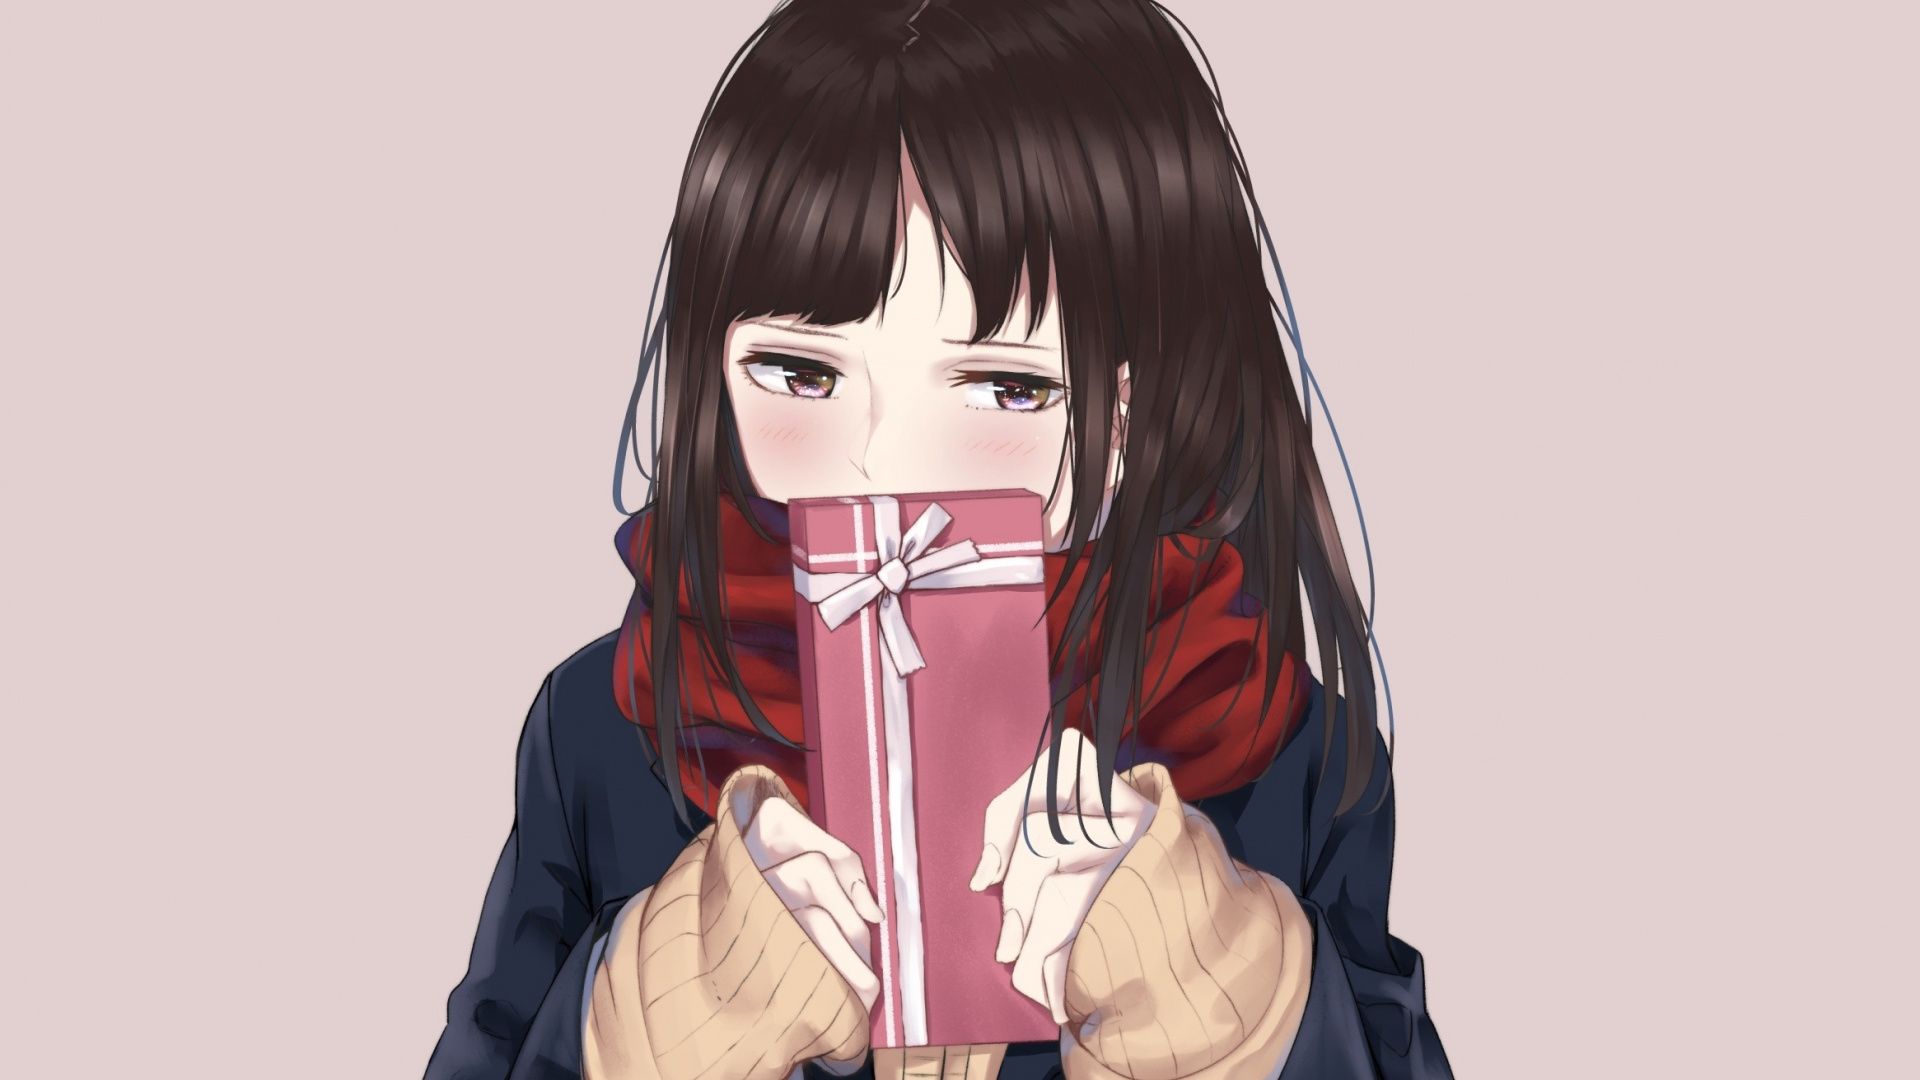 Download 1920x1080 wallpaper cute, anime girl, shy, gift box, full